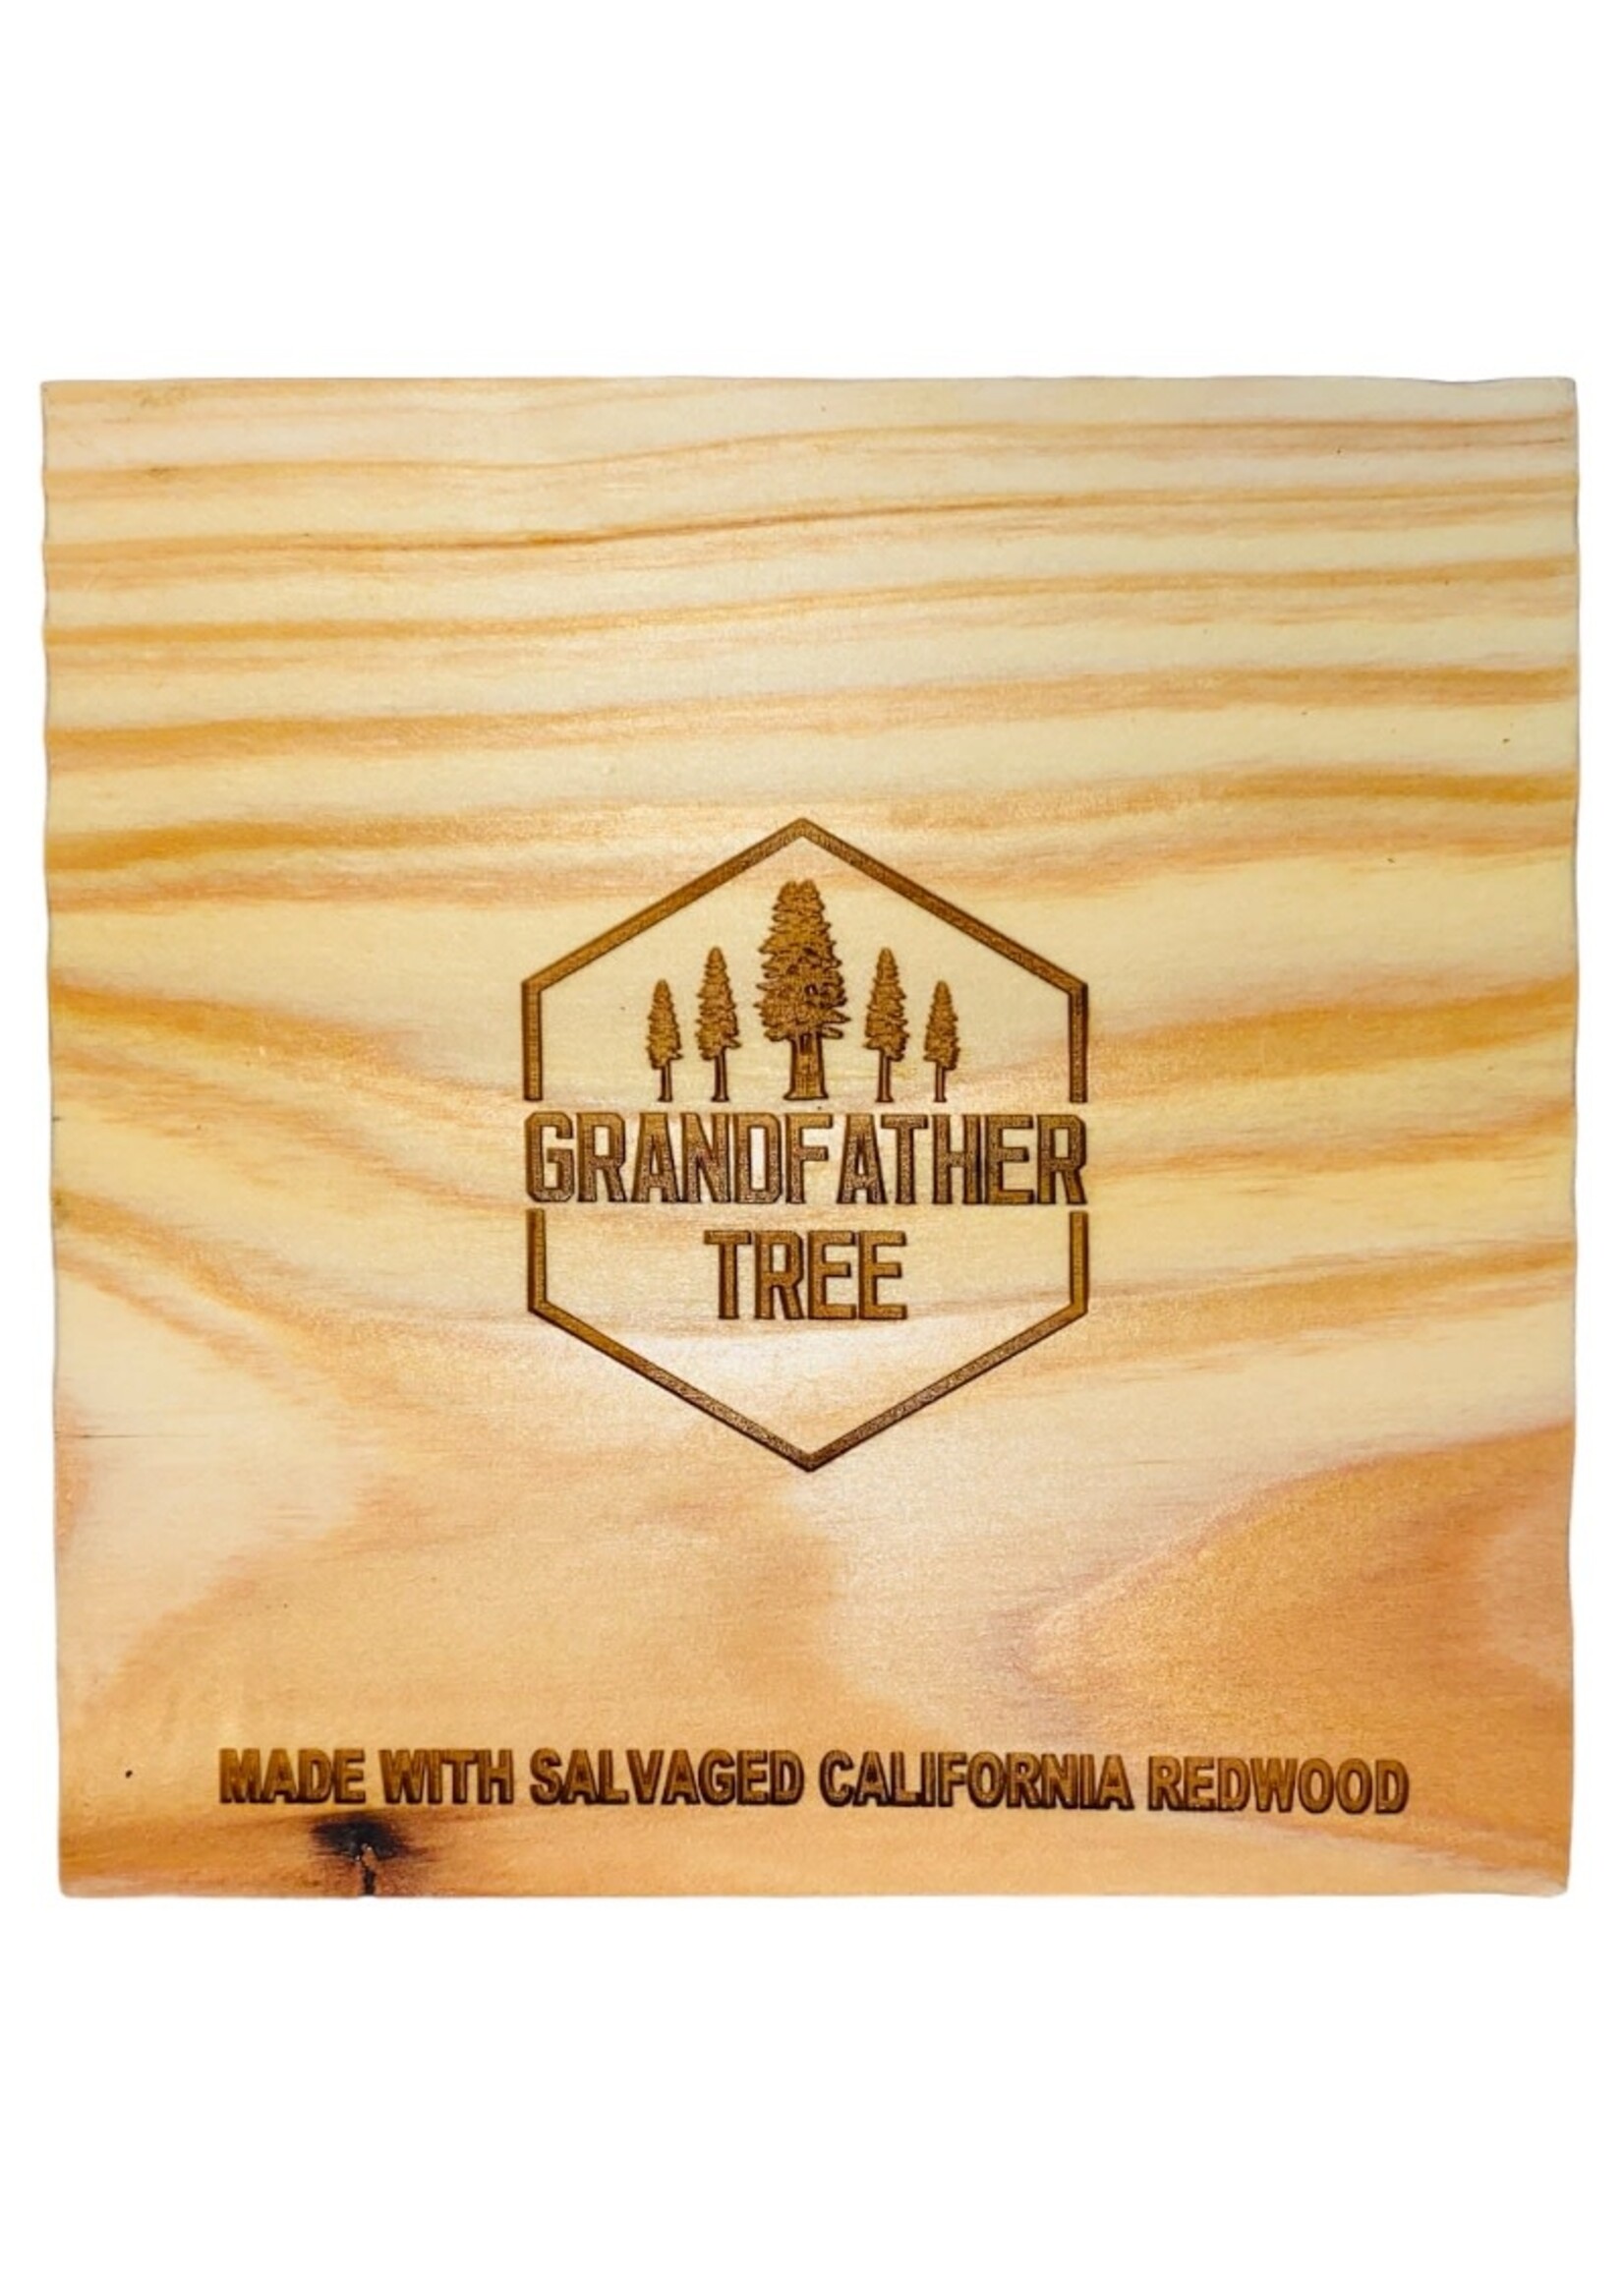 Redwood Shelf Sitter - It's On My List 5.5”